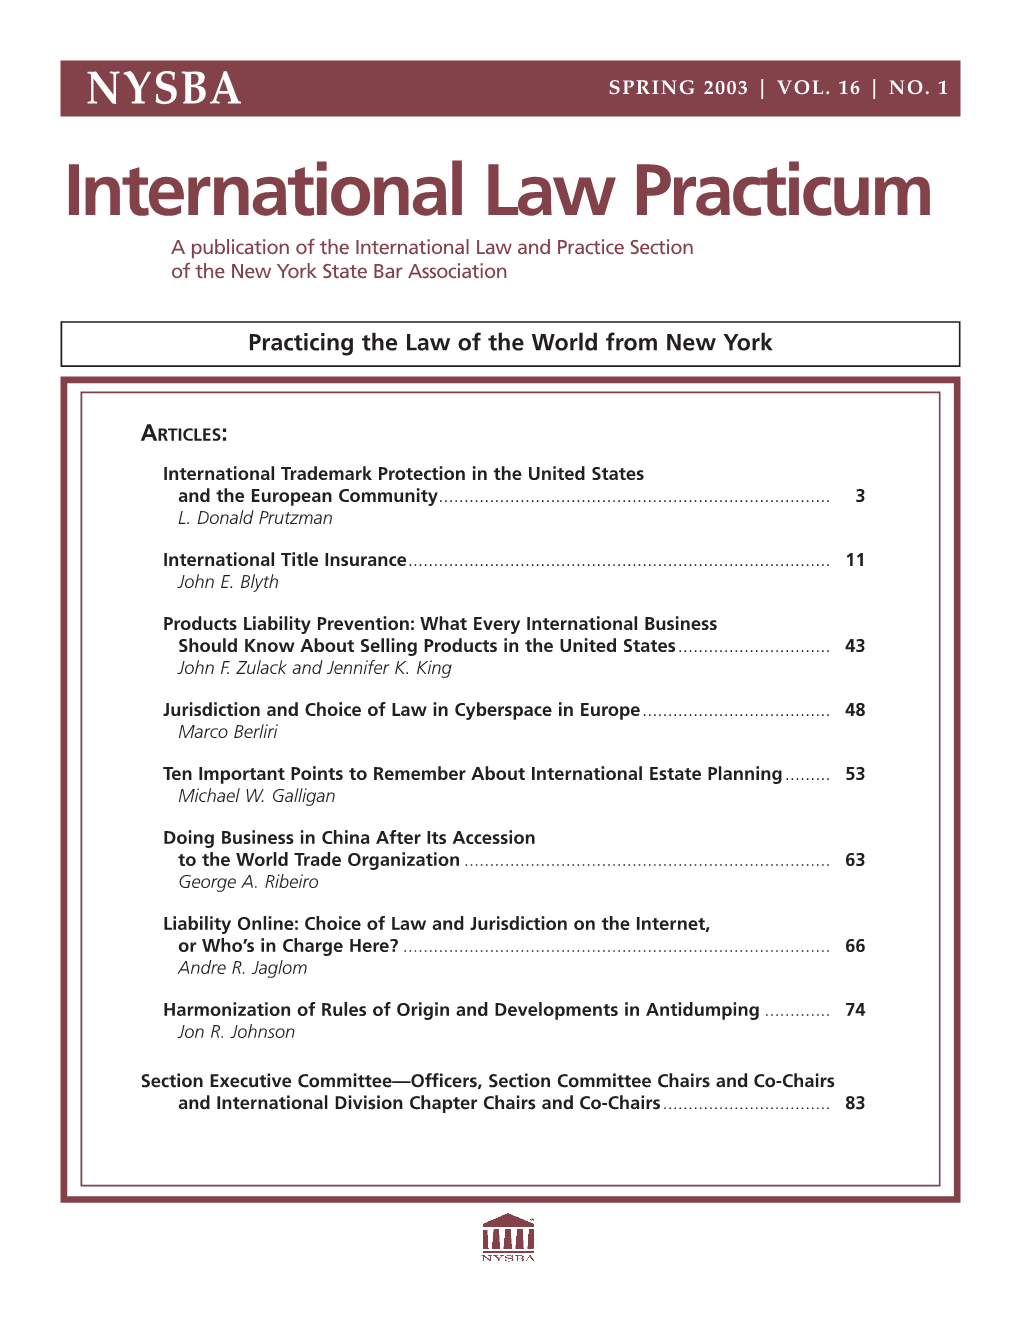 International Law Practicum a Publication of the International Law and Practice Section of the New York State Bar Association